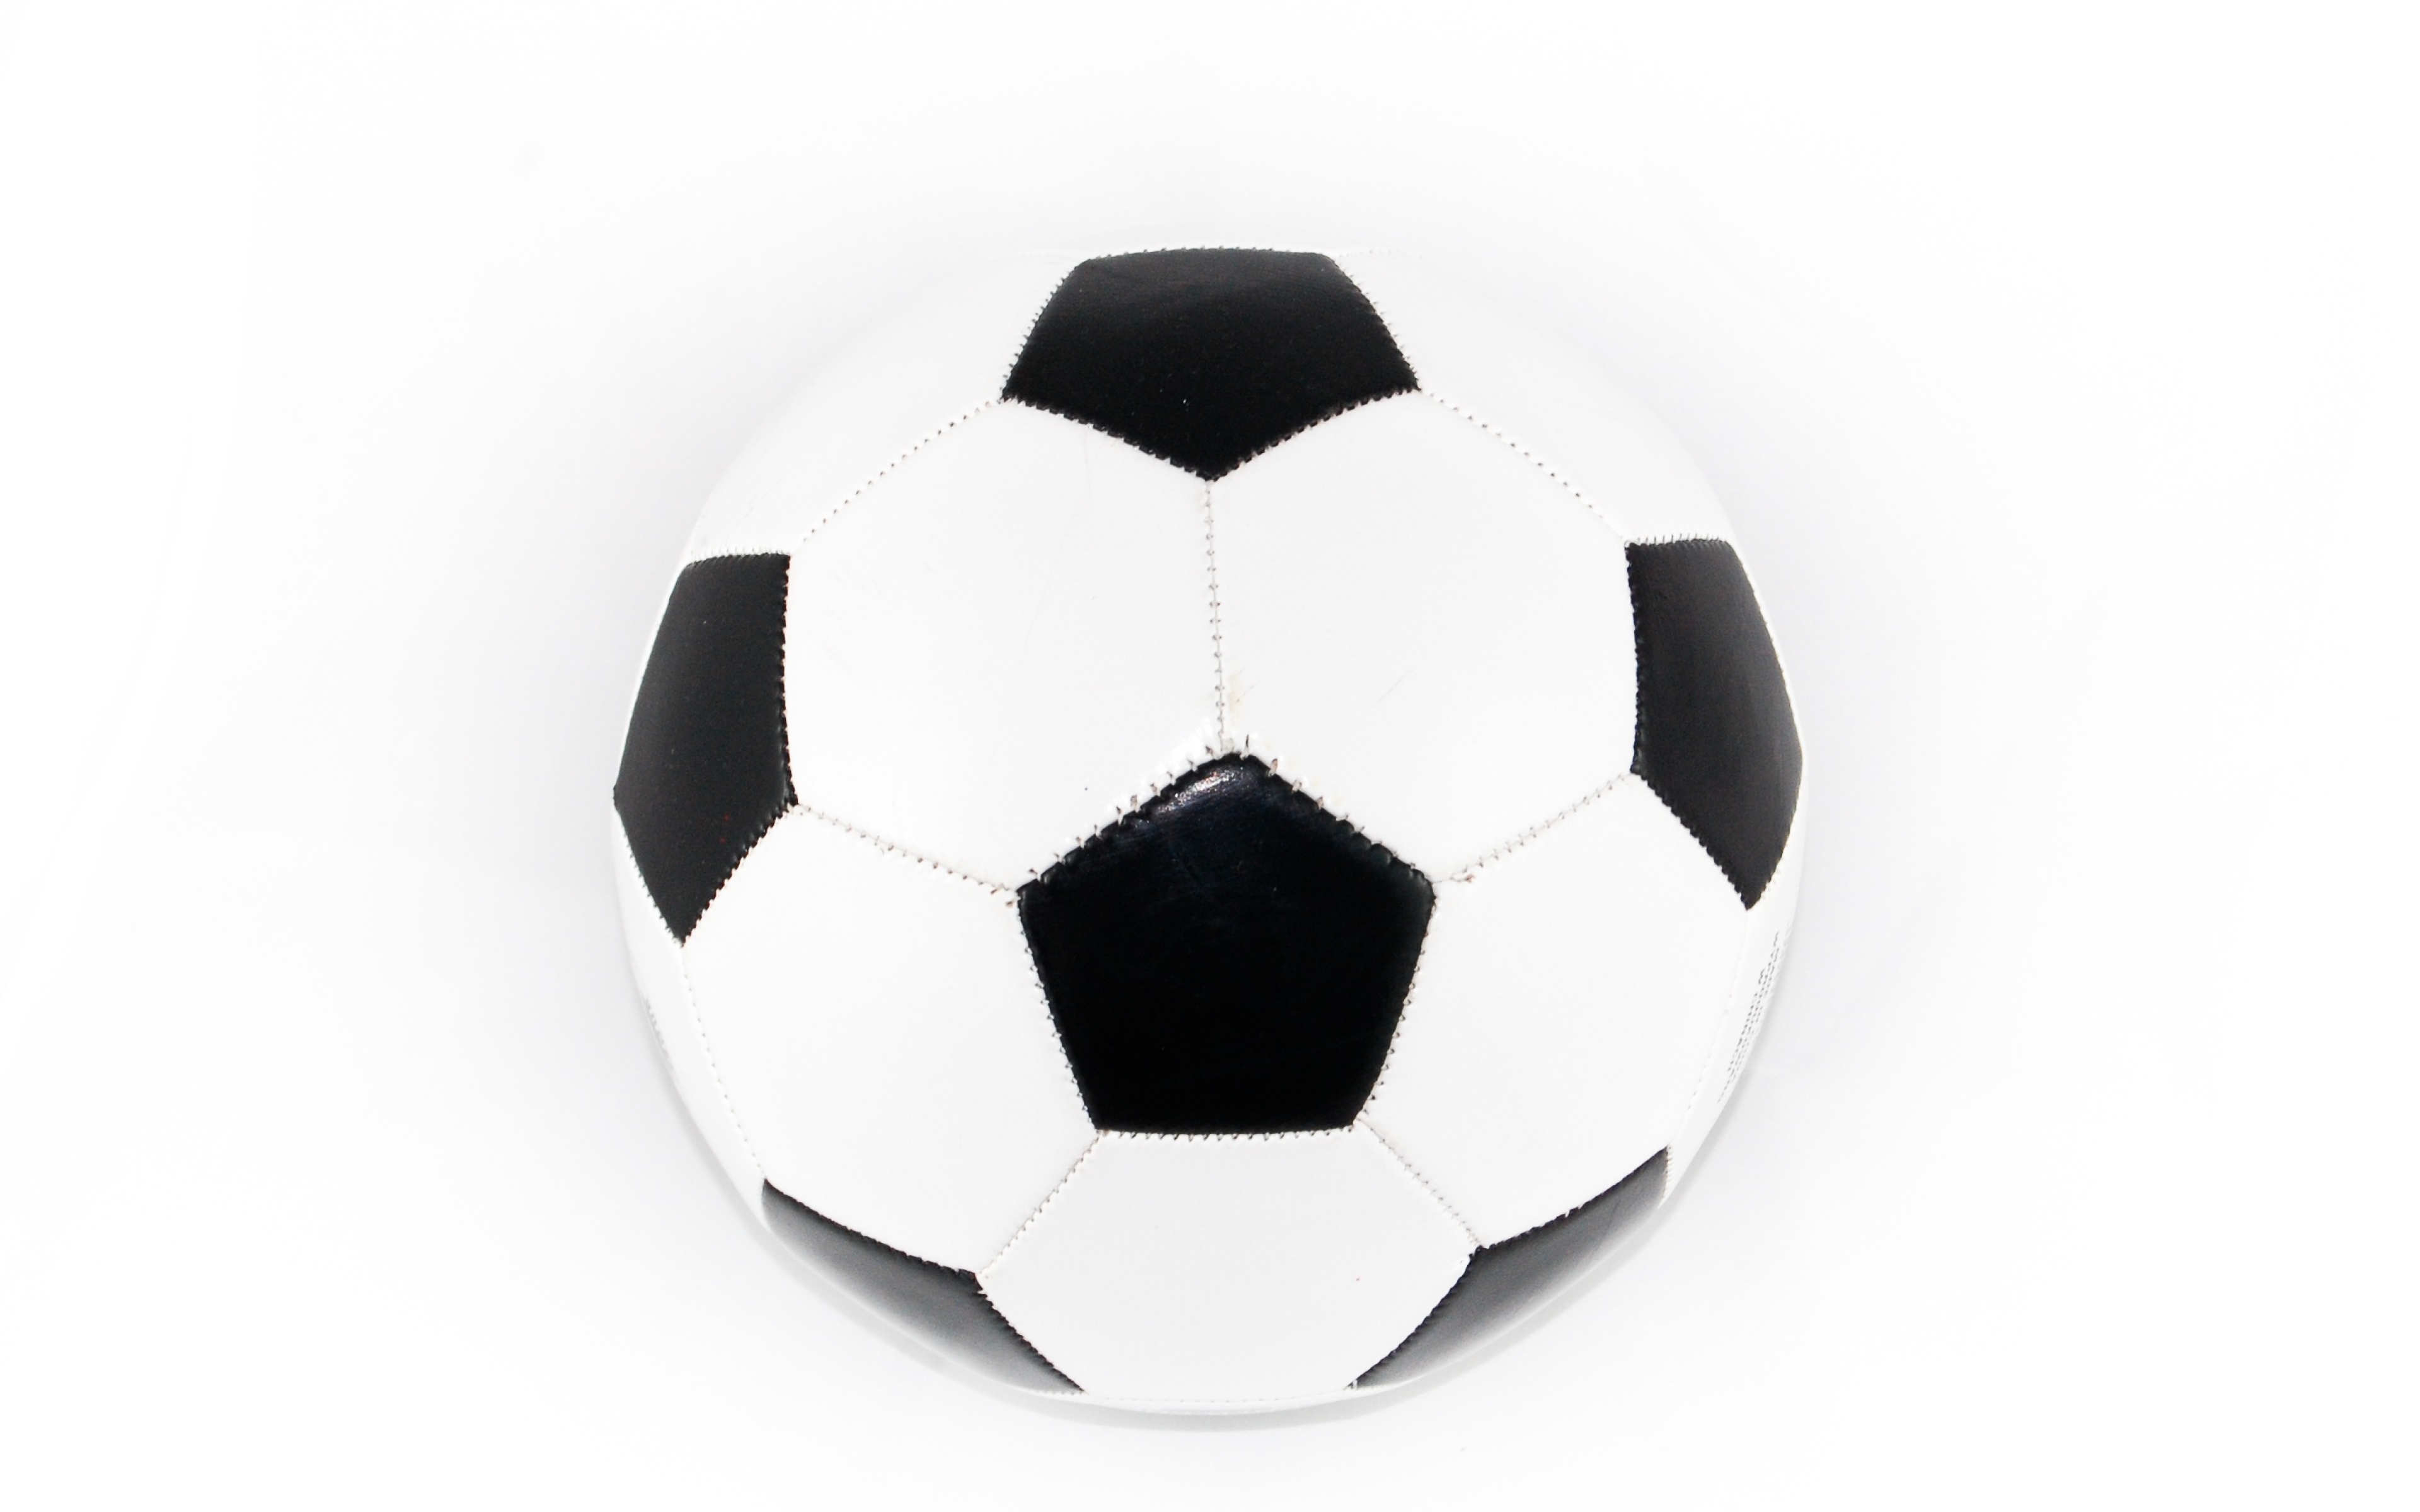 Голова мяч футбол. Футбольный мяч. Футбольный мячик. Футбольный мяч белый. Футбольный мяч без фона.